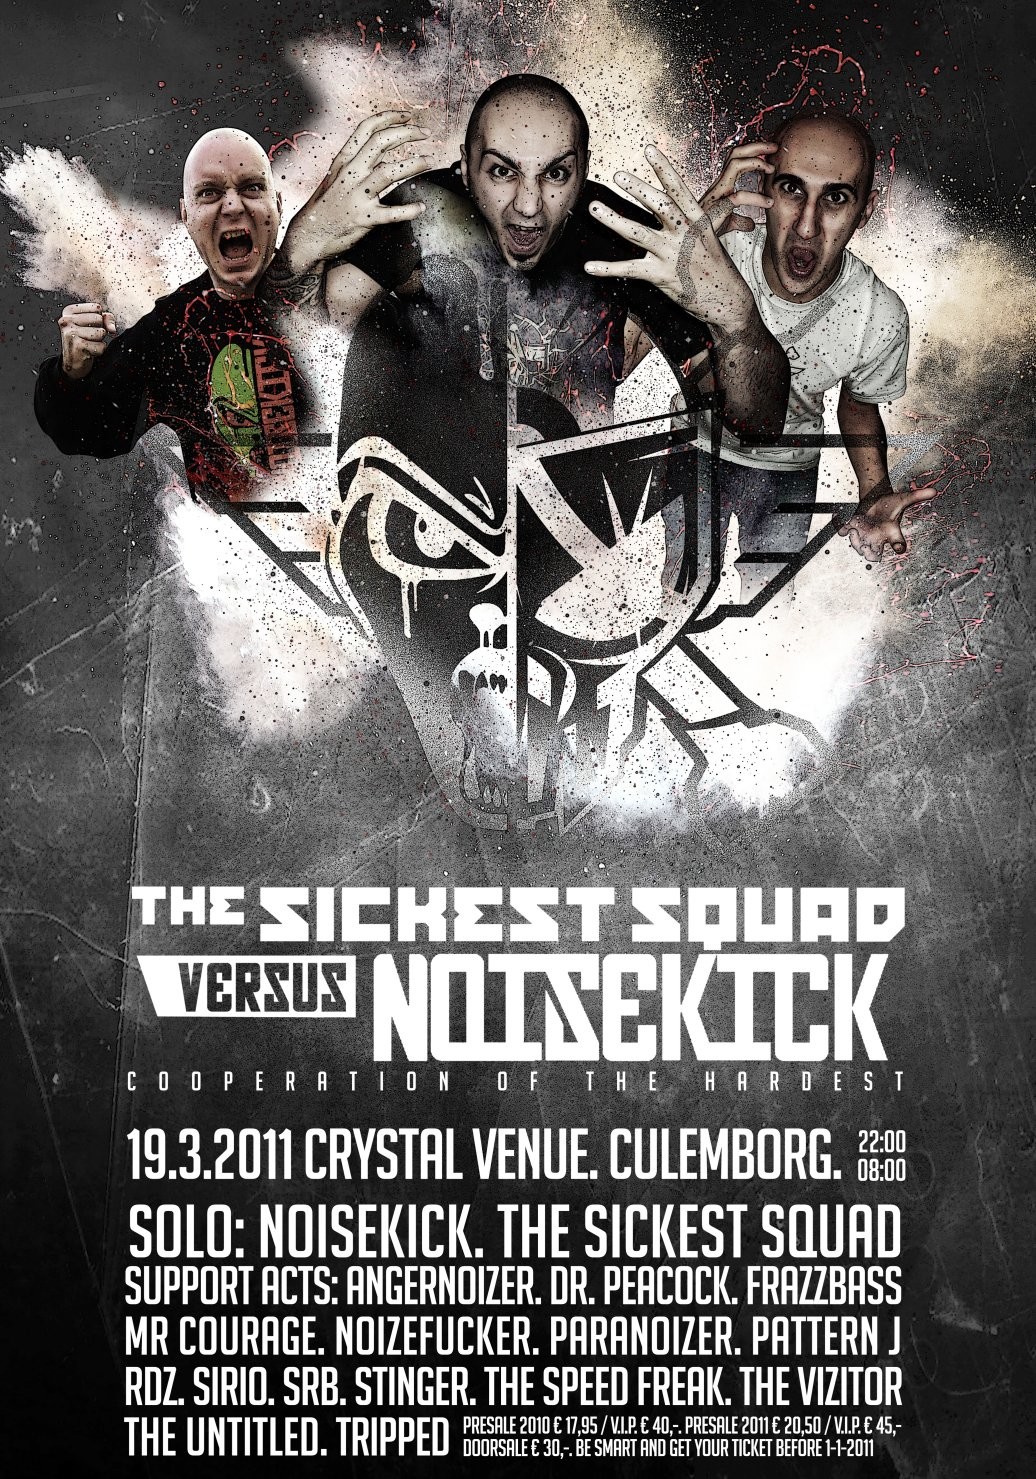 The Sickest Squad vs Noisekick